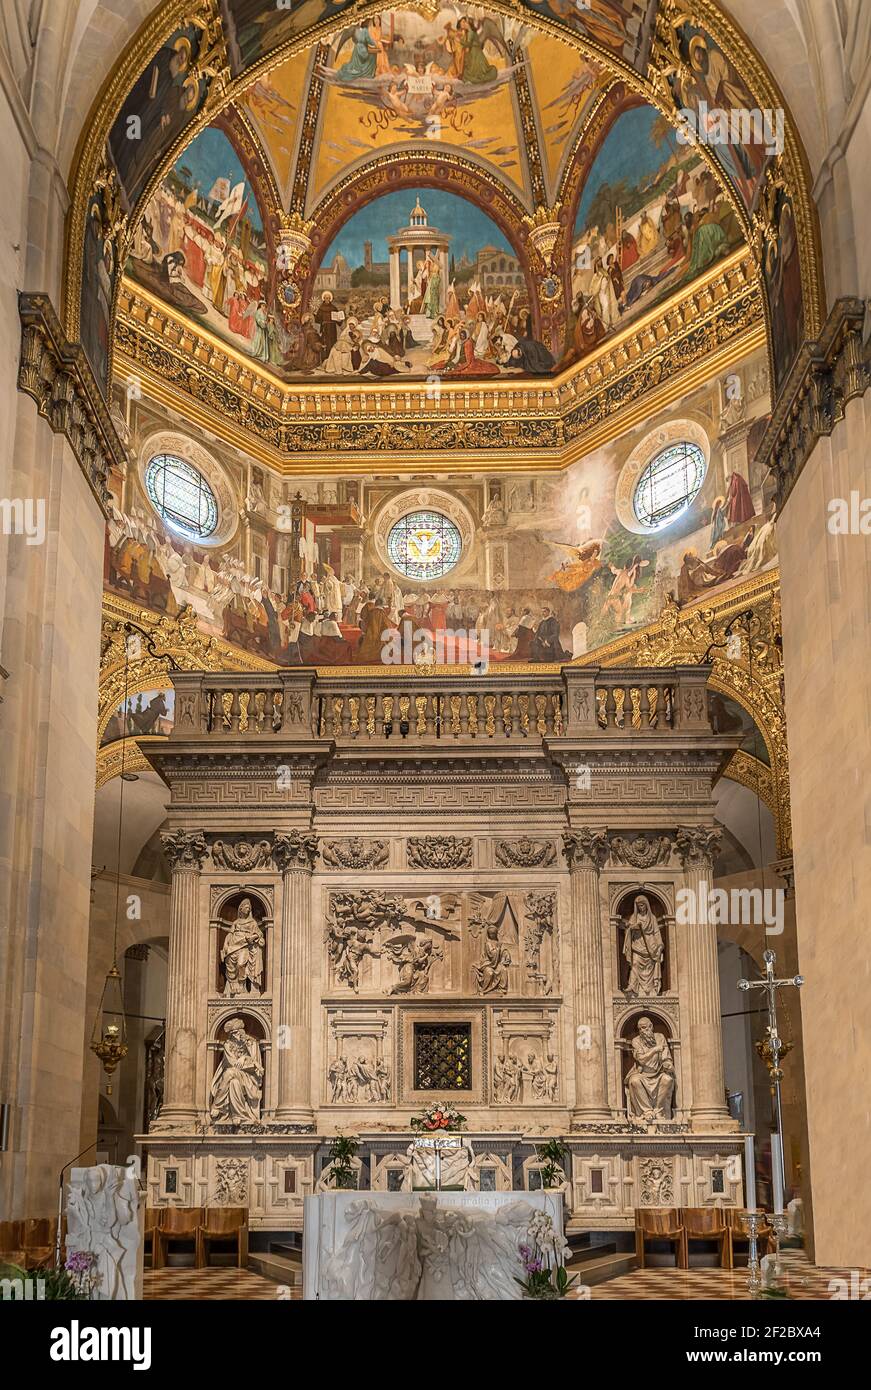 LORETO, ITALY – AUG 13, 2020: The Basilica della Santa Casa (English: Basilica of the Holy House) is a Marian shrine in Loreto, Italy Stock Photo